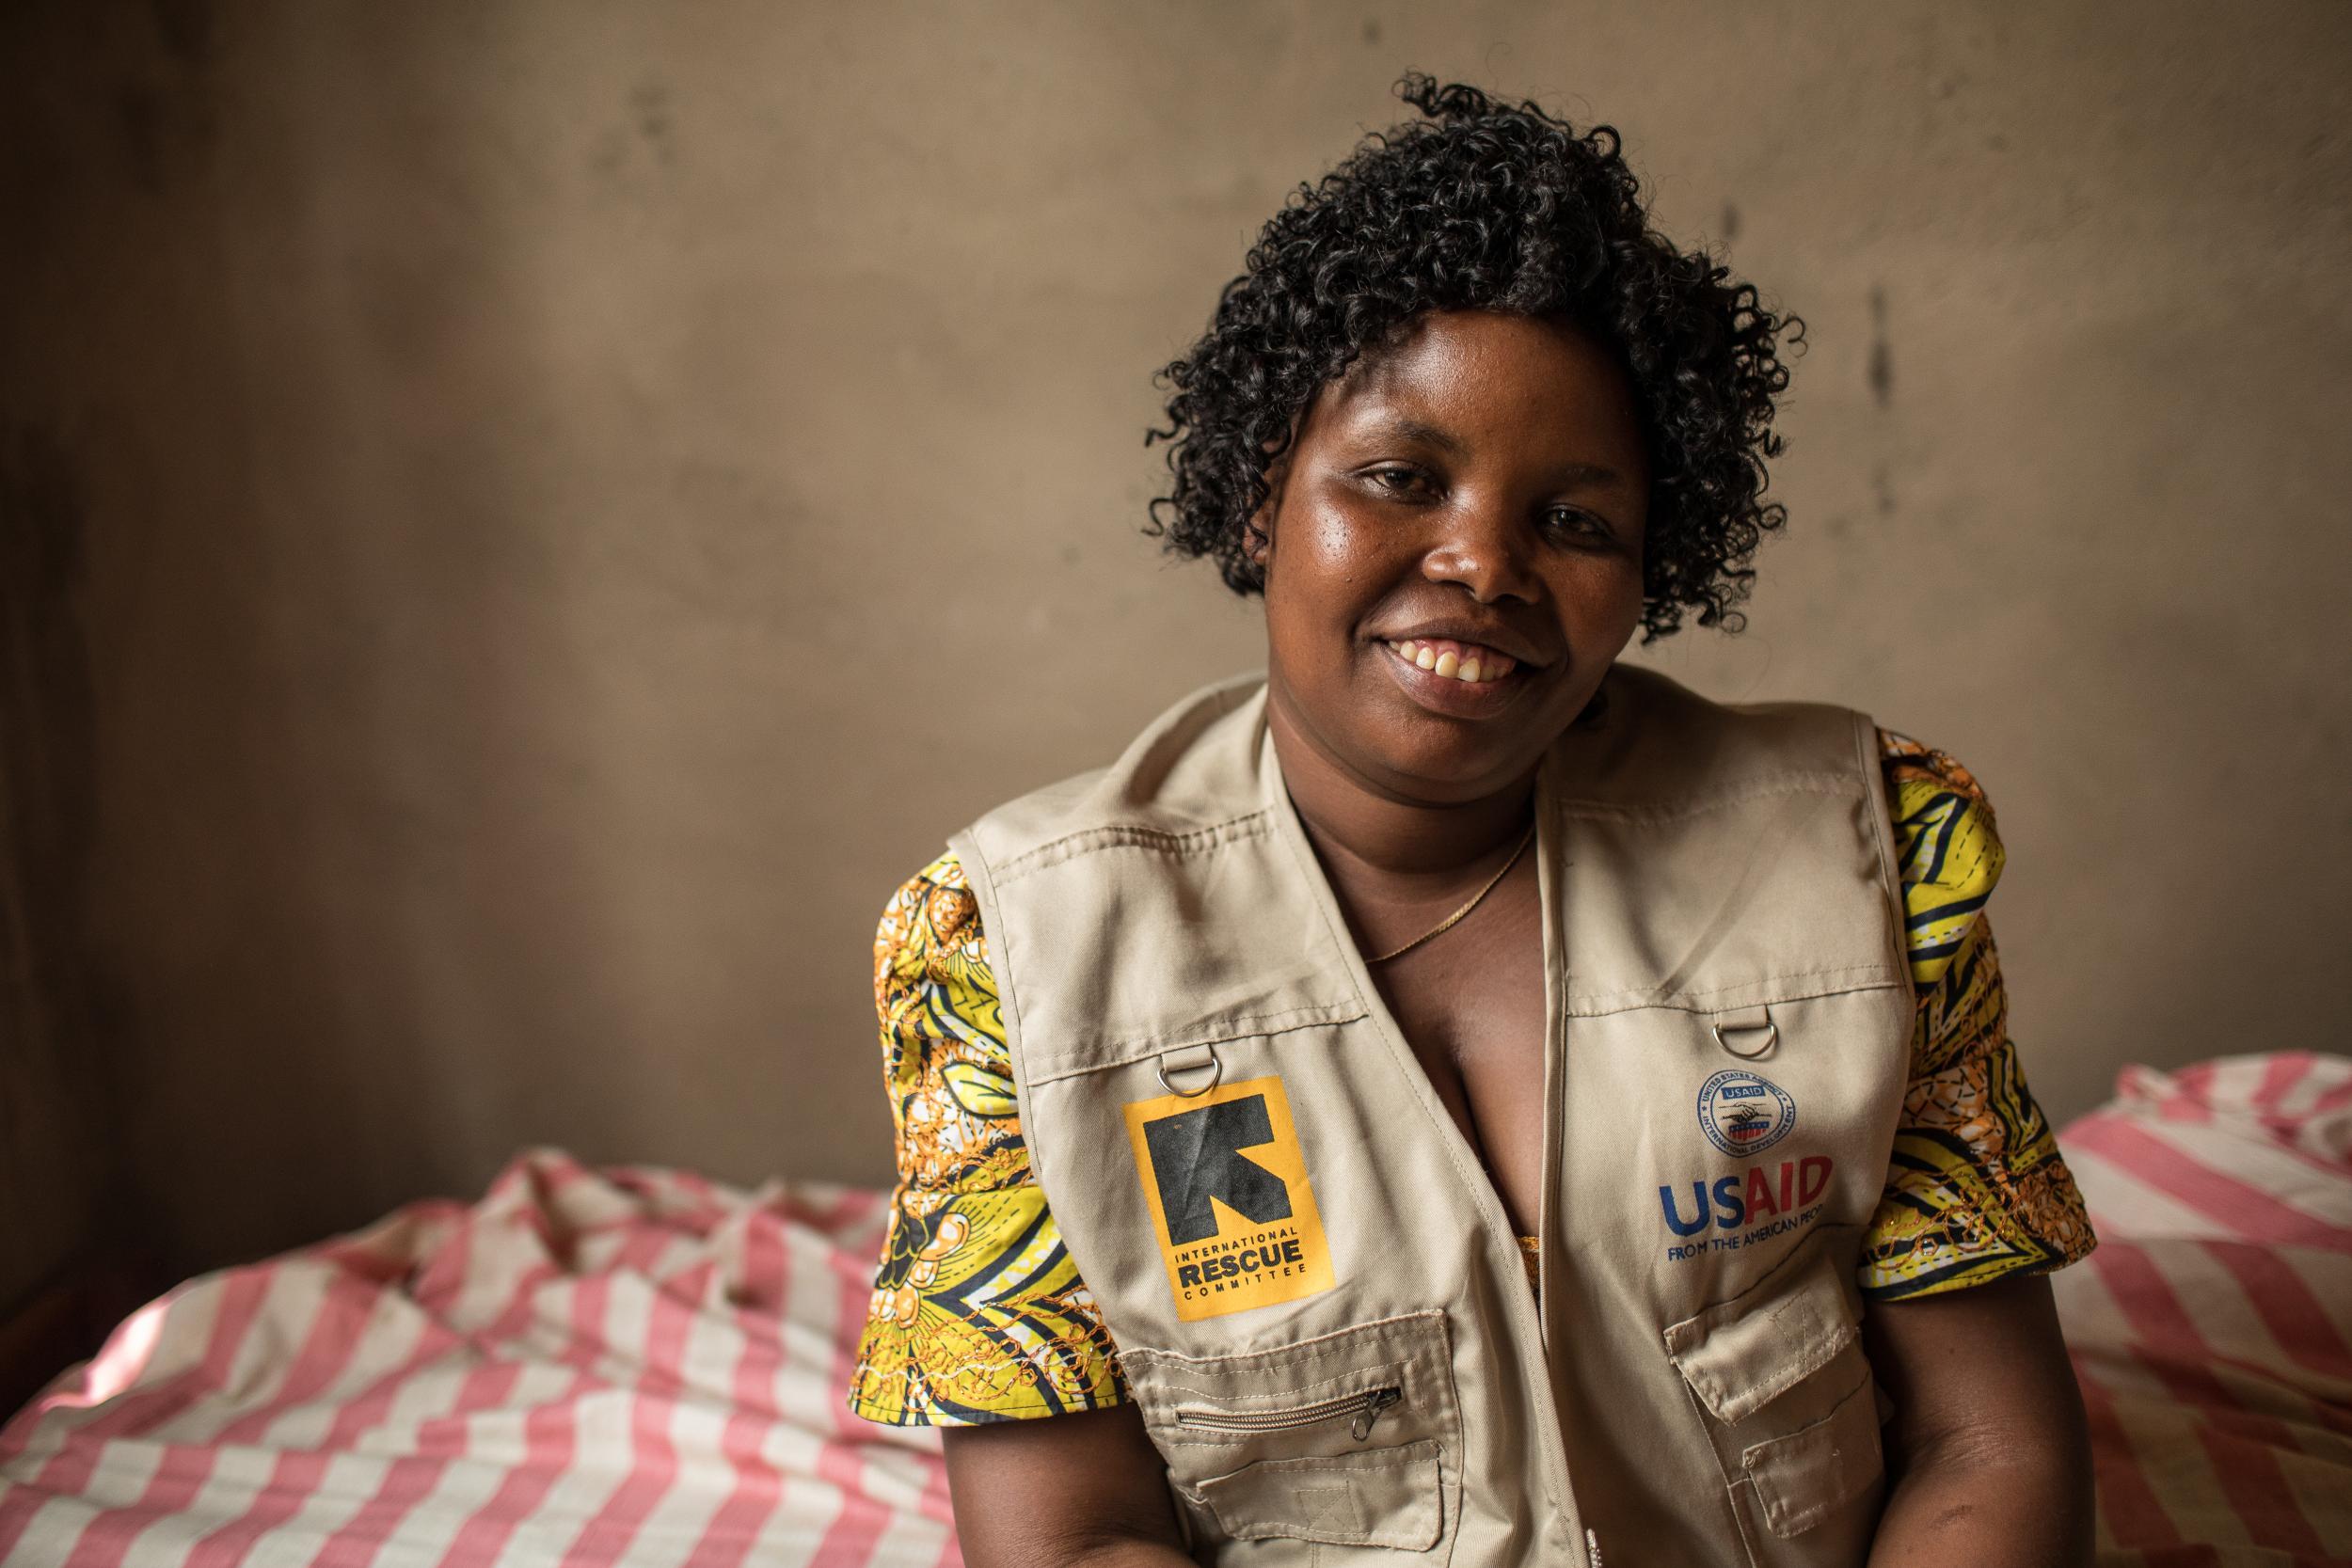 Celestine Kahindo, herself an Ebola survivor, lost a son to the disease